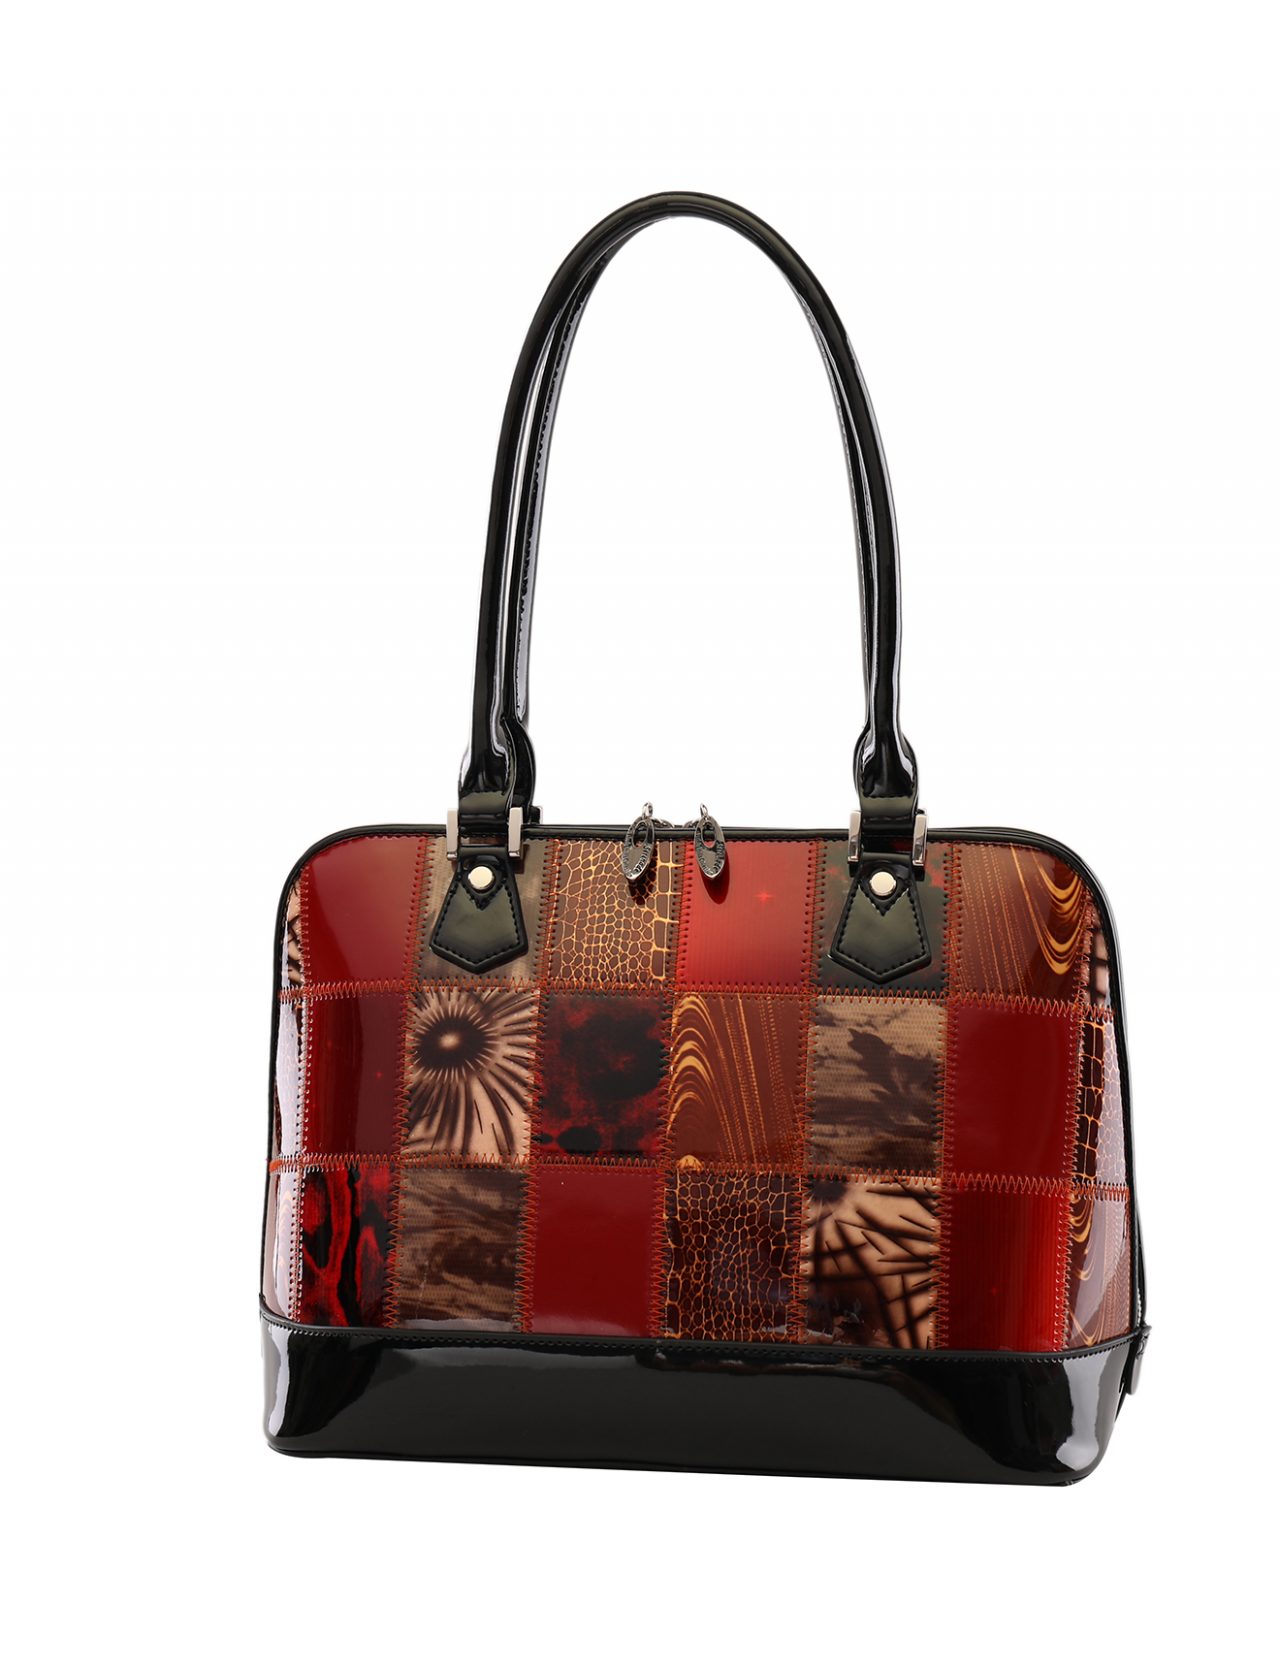 Serenade Leather Handbag/Shoulder BagDunn's Leathergoods